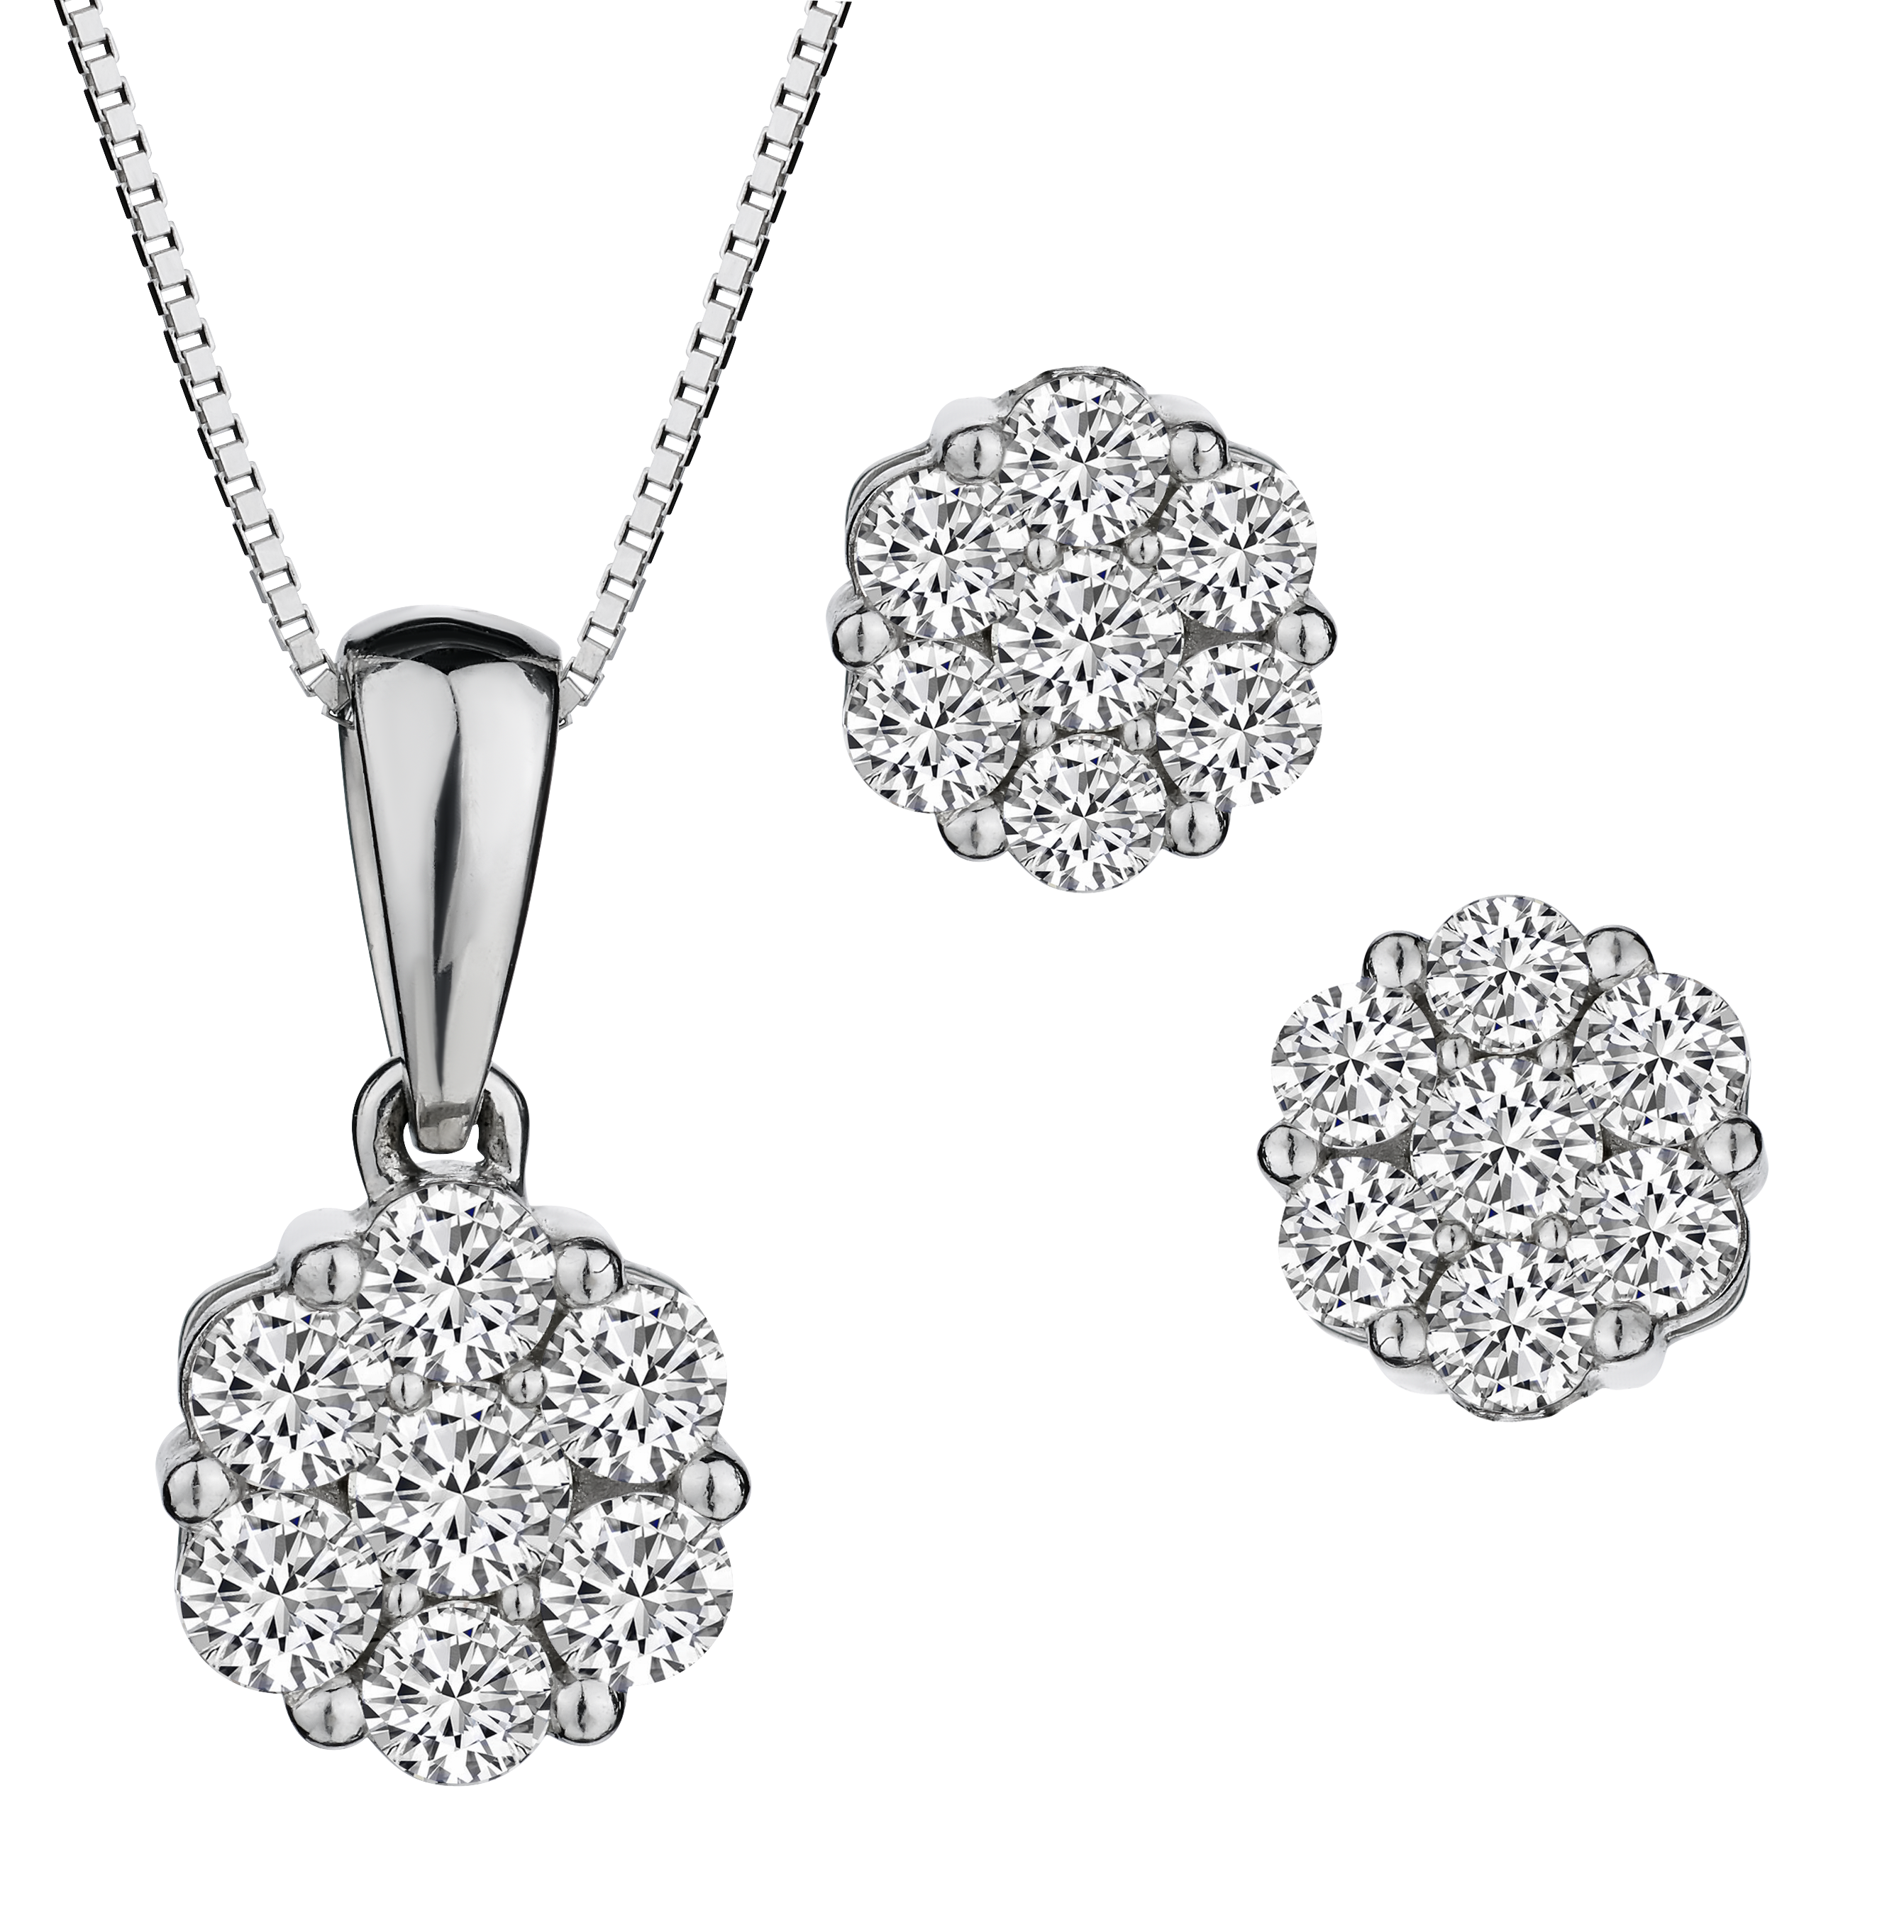 1.25 Carats of Diamonds "Flower" Pendant & Earrings Set, 10kt White Gold.....................NOW